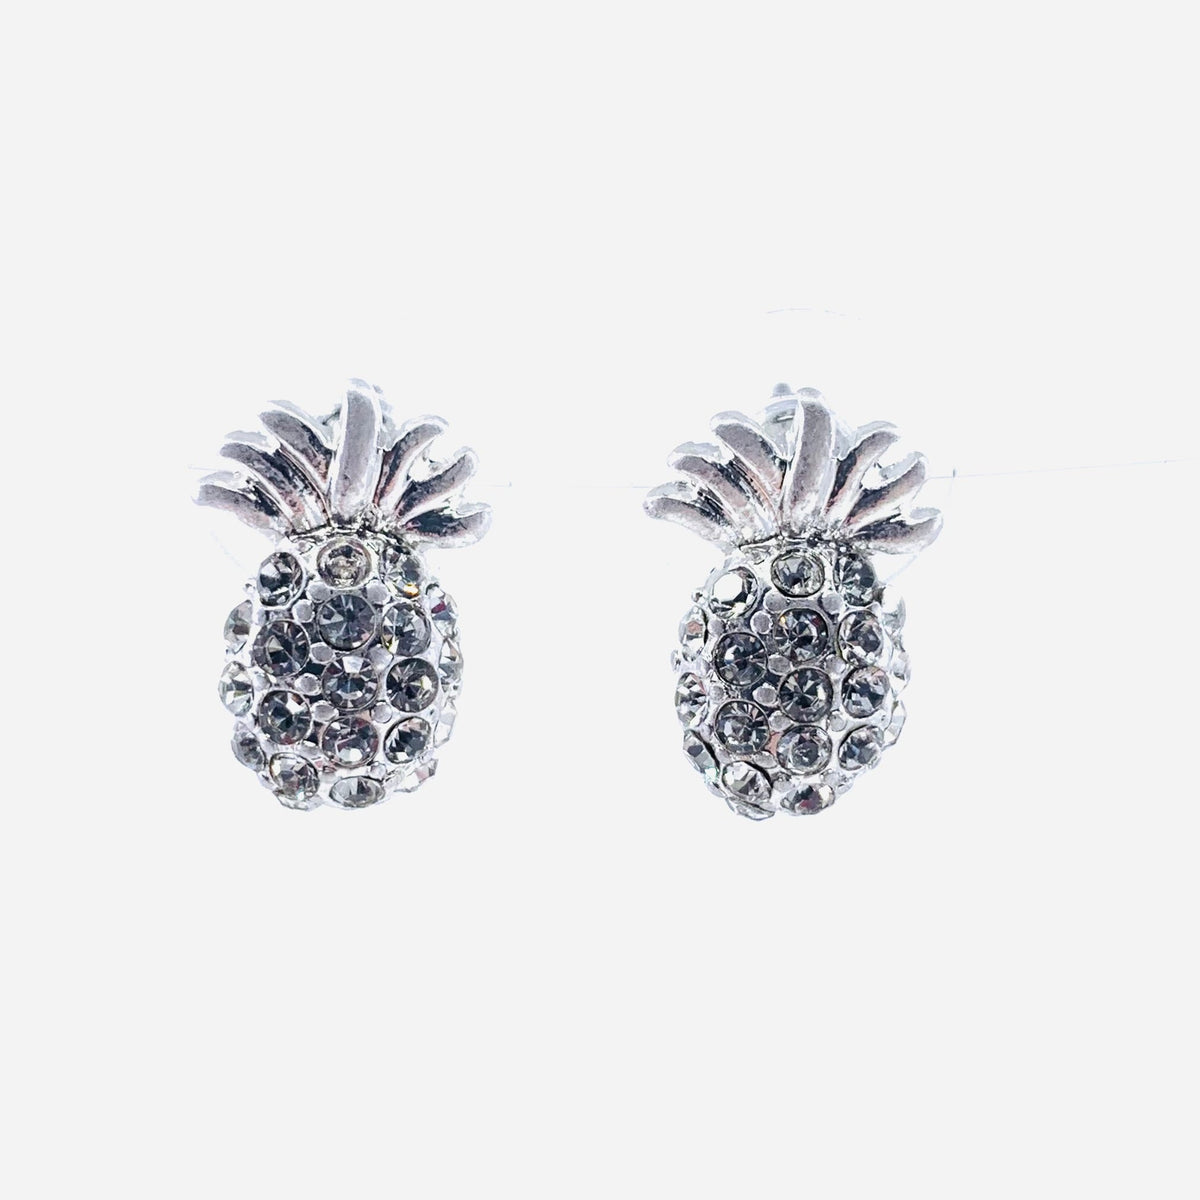 Rhinestone Pineapple Earrings Jewelry Cloie NY Silver 